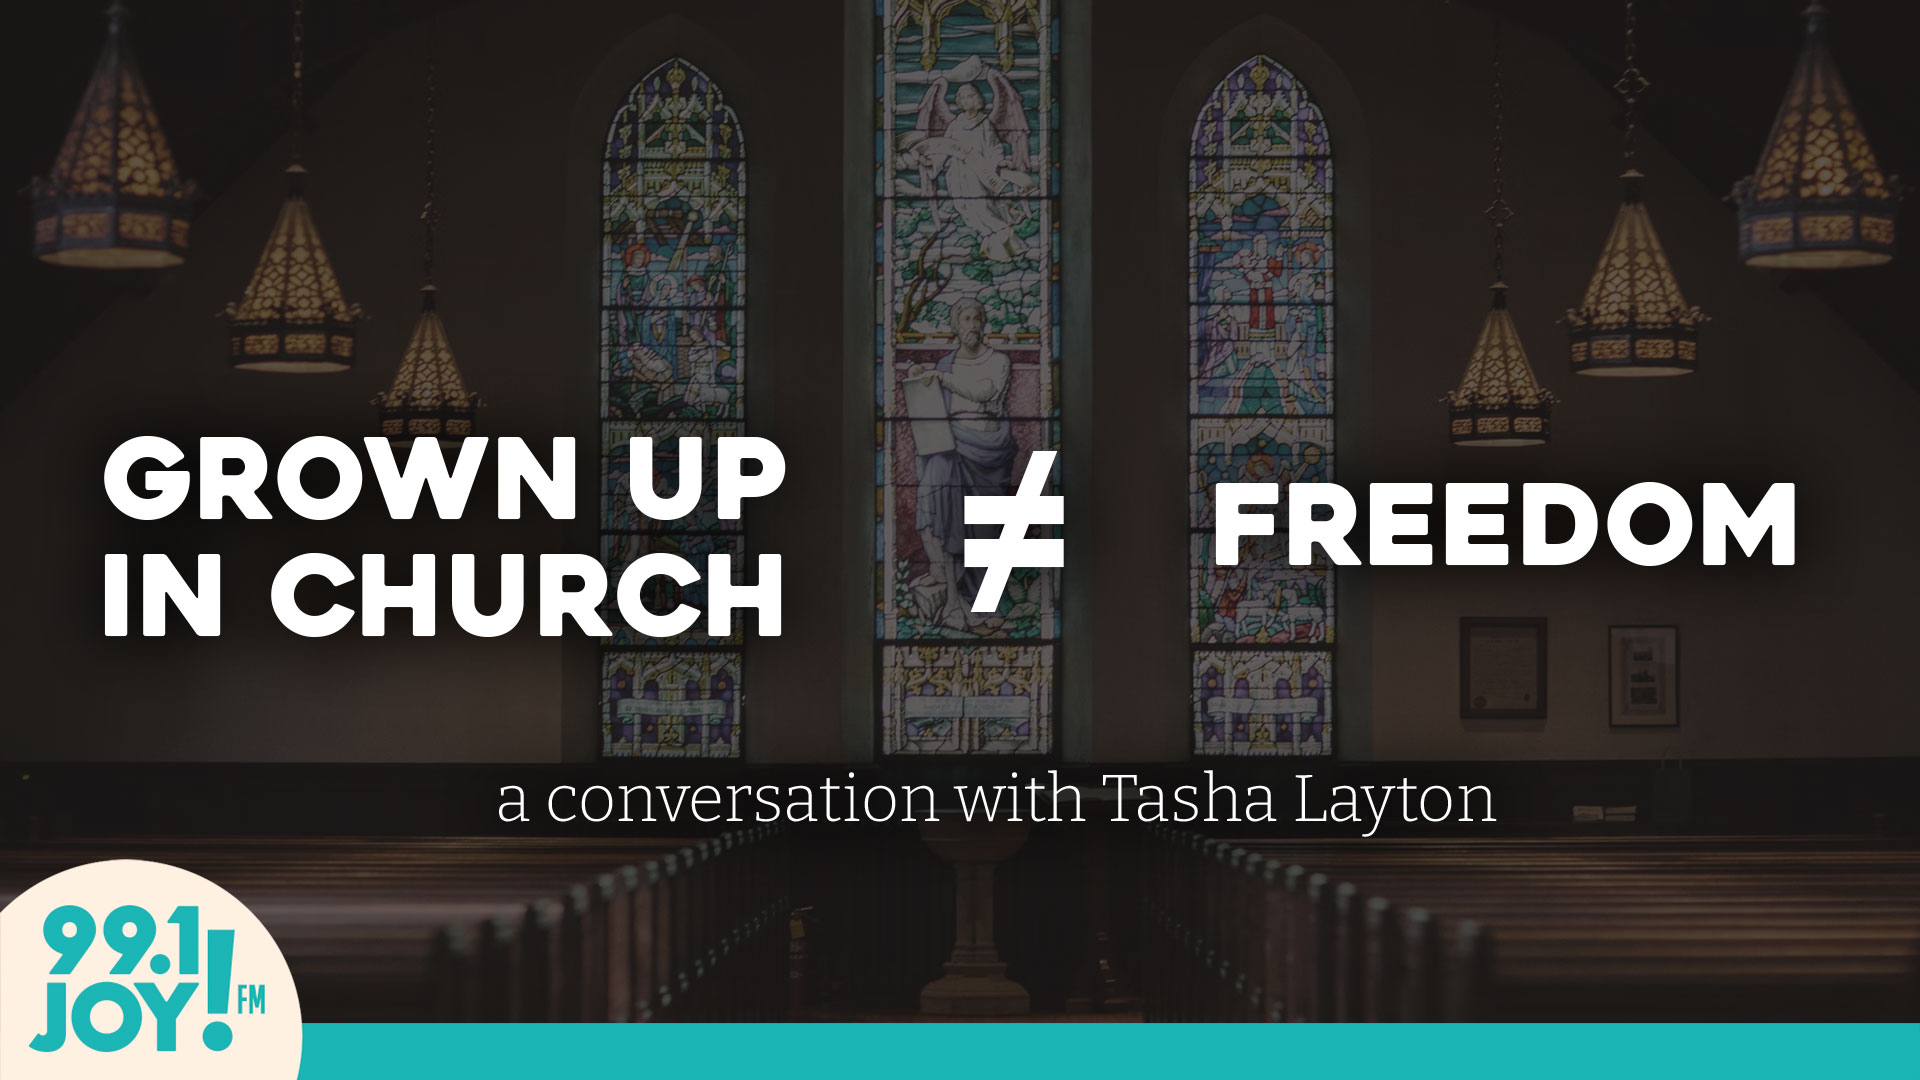 I grew up in church. But I don’t feel free. | with Tasha Layton